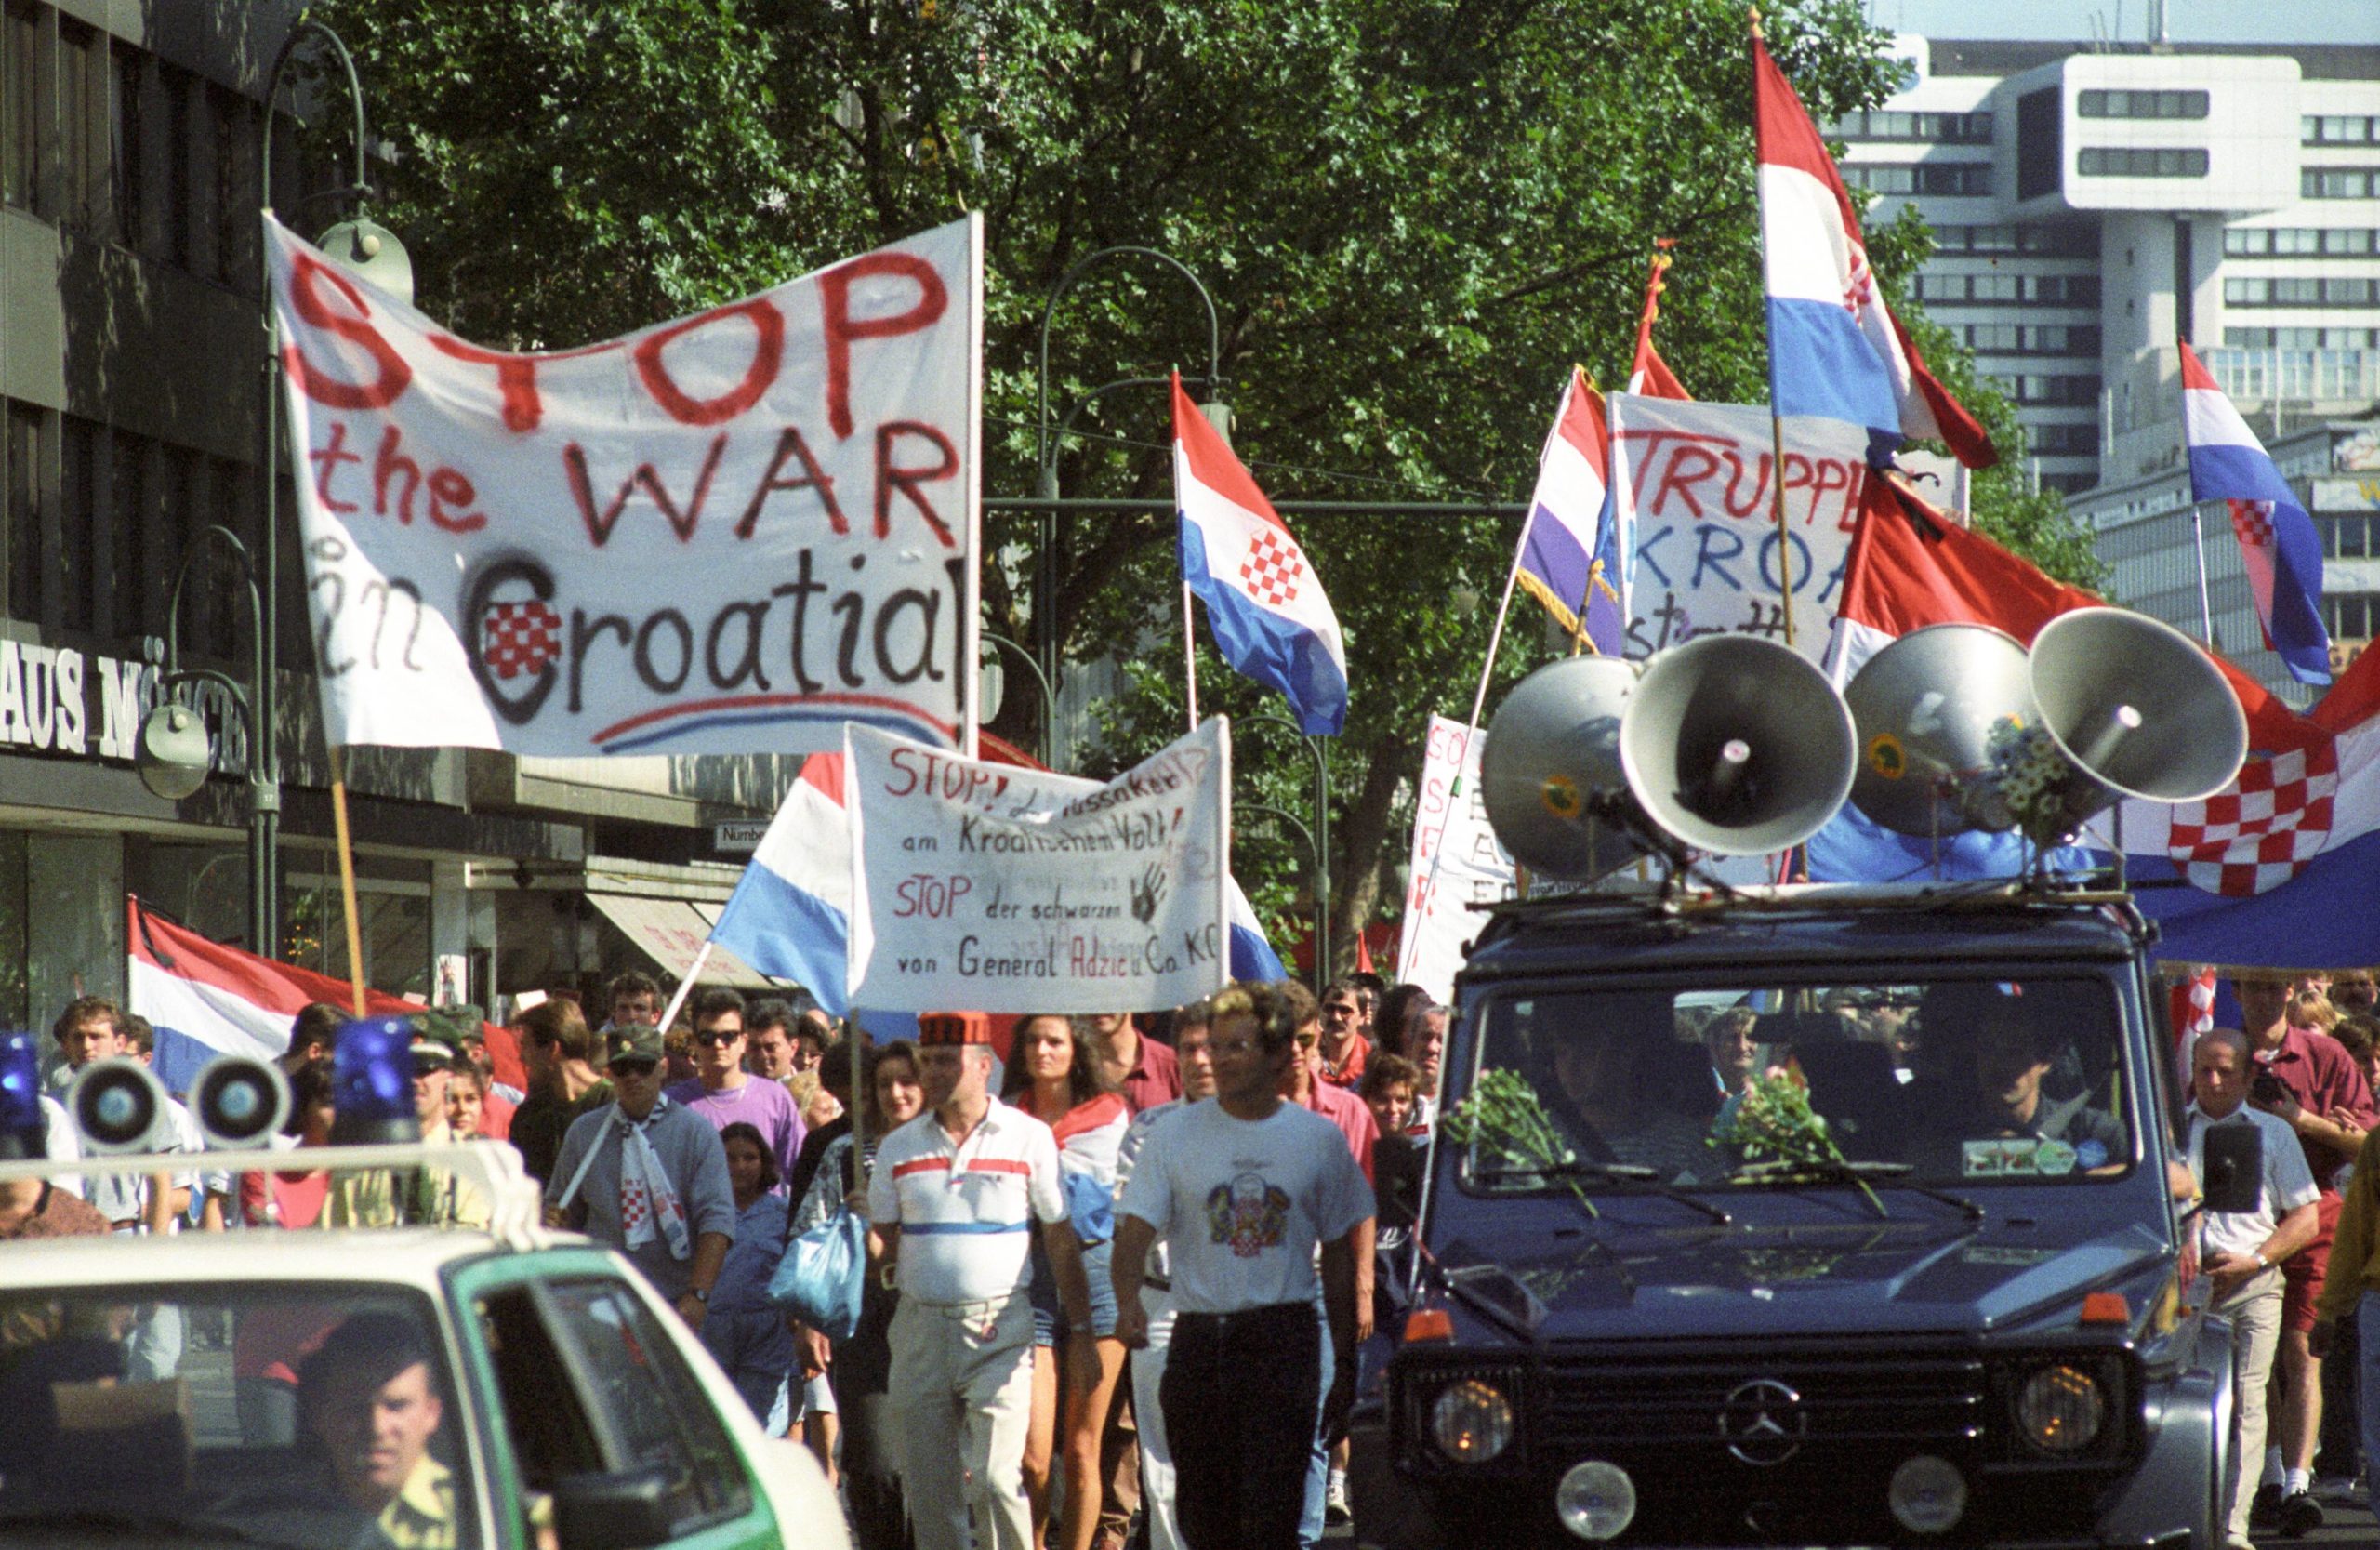 Protestdemonstration von in Berlin lebenden Kroaten gegen den Krieg im ehemaligen Jugoslawien. Foto: Imago/Seeliger